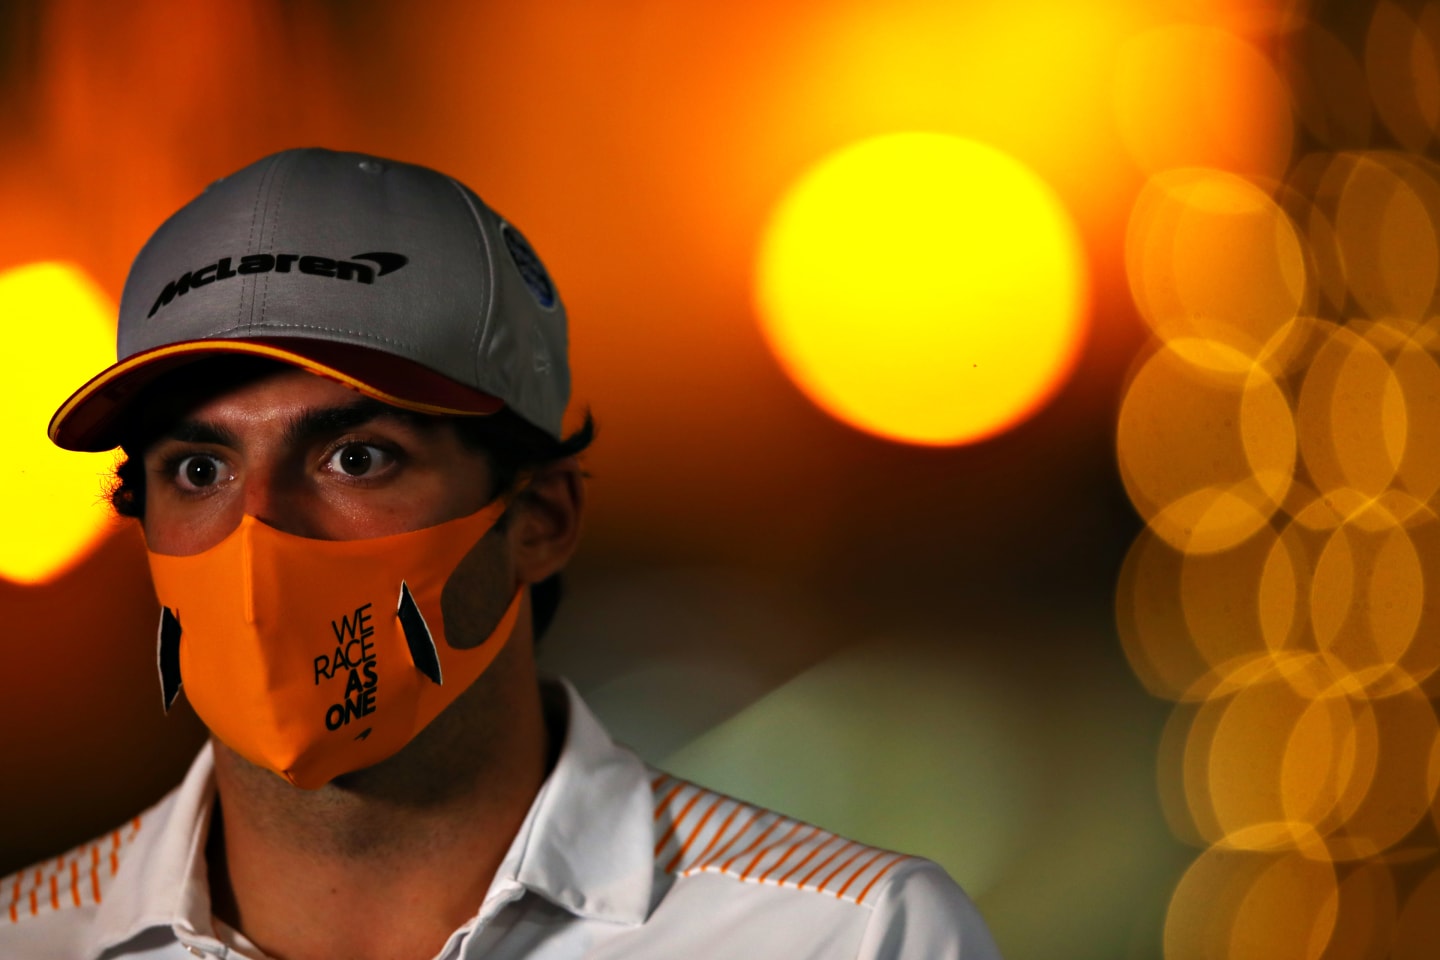 BAHRAIN, BAHRAIN - NOVEMBER 26: Carlos Sainz of Spain and McLaren F1 looks on in the Paddock during